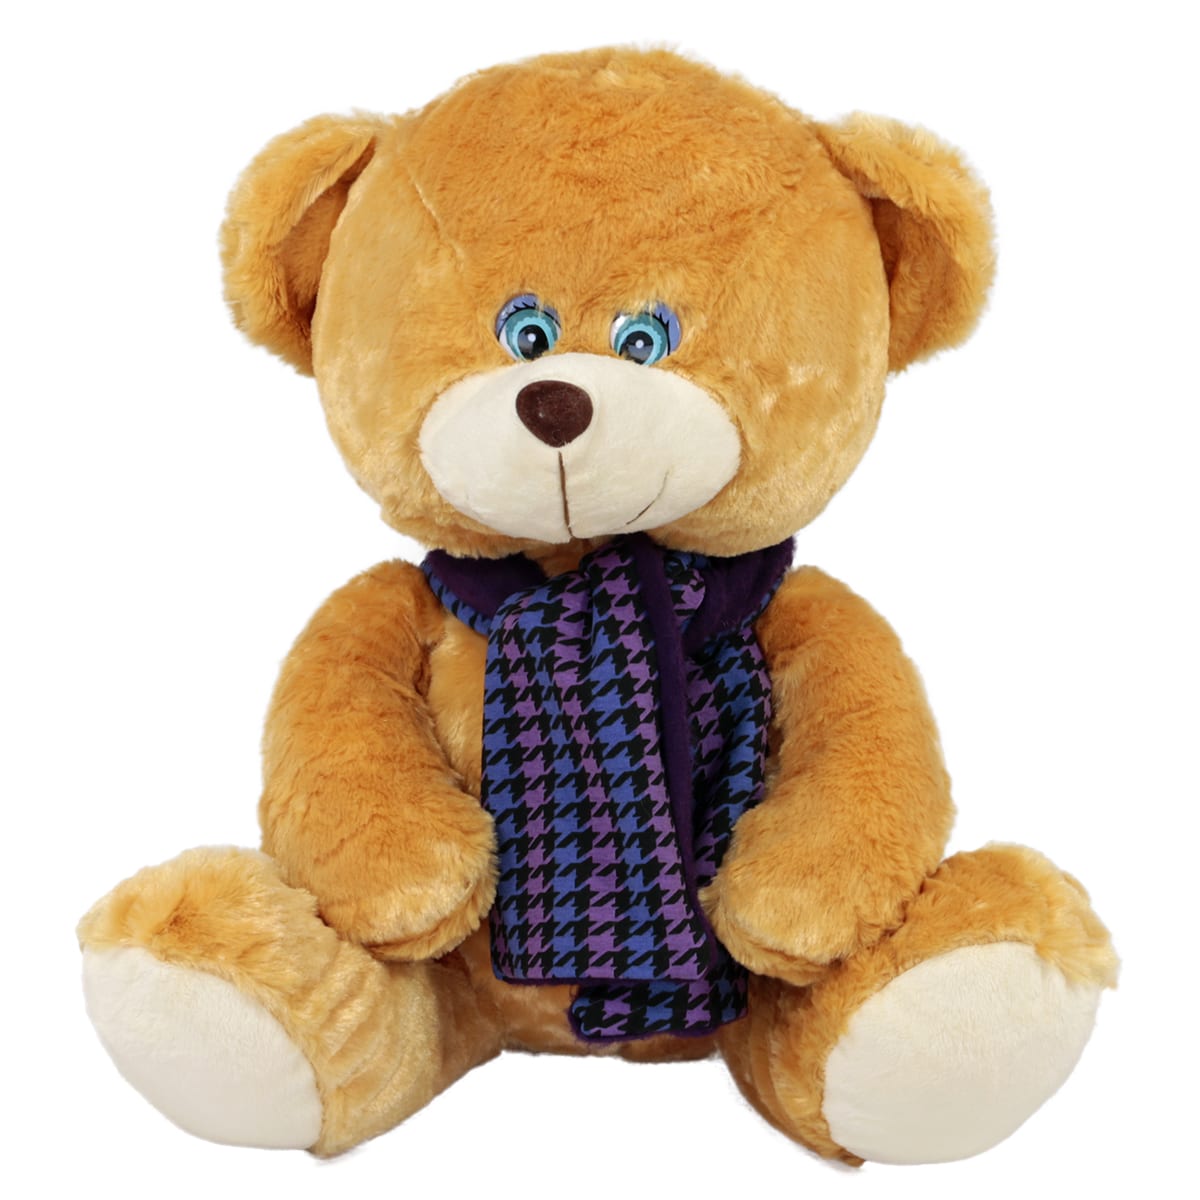 Bear with purple scarf